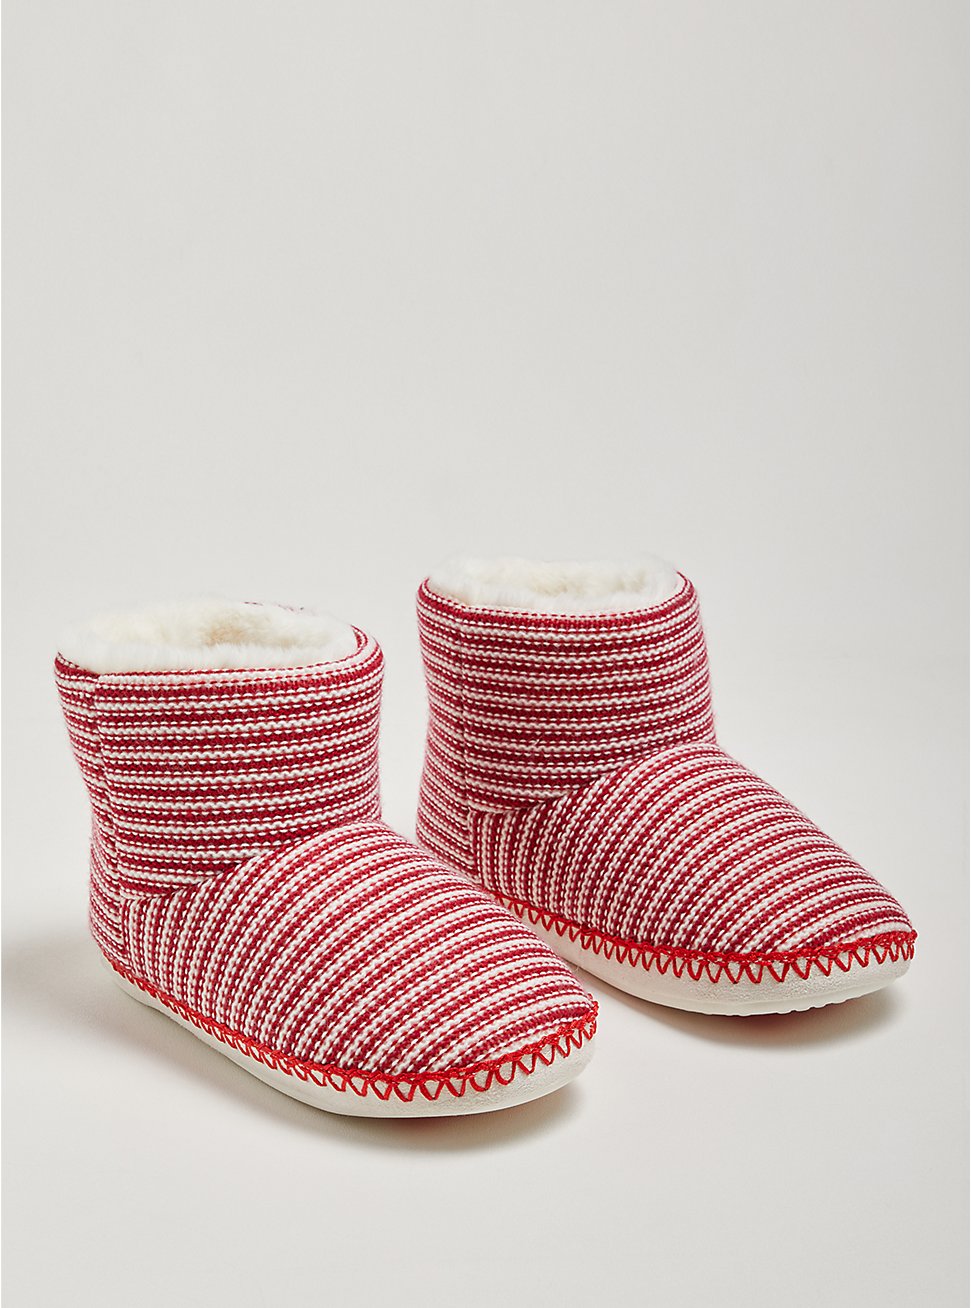 Plus Size Knit Cozy Bootie - Red Stripe (WW), RED, hi-res